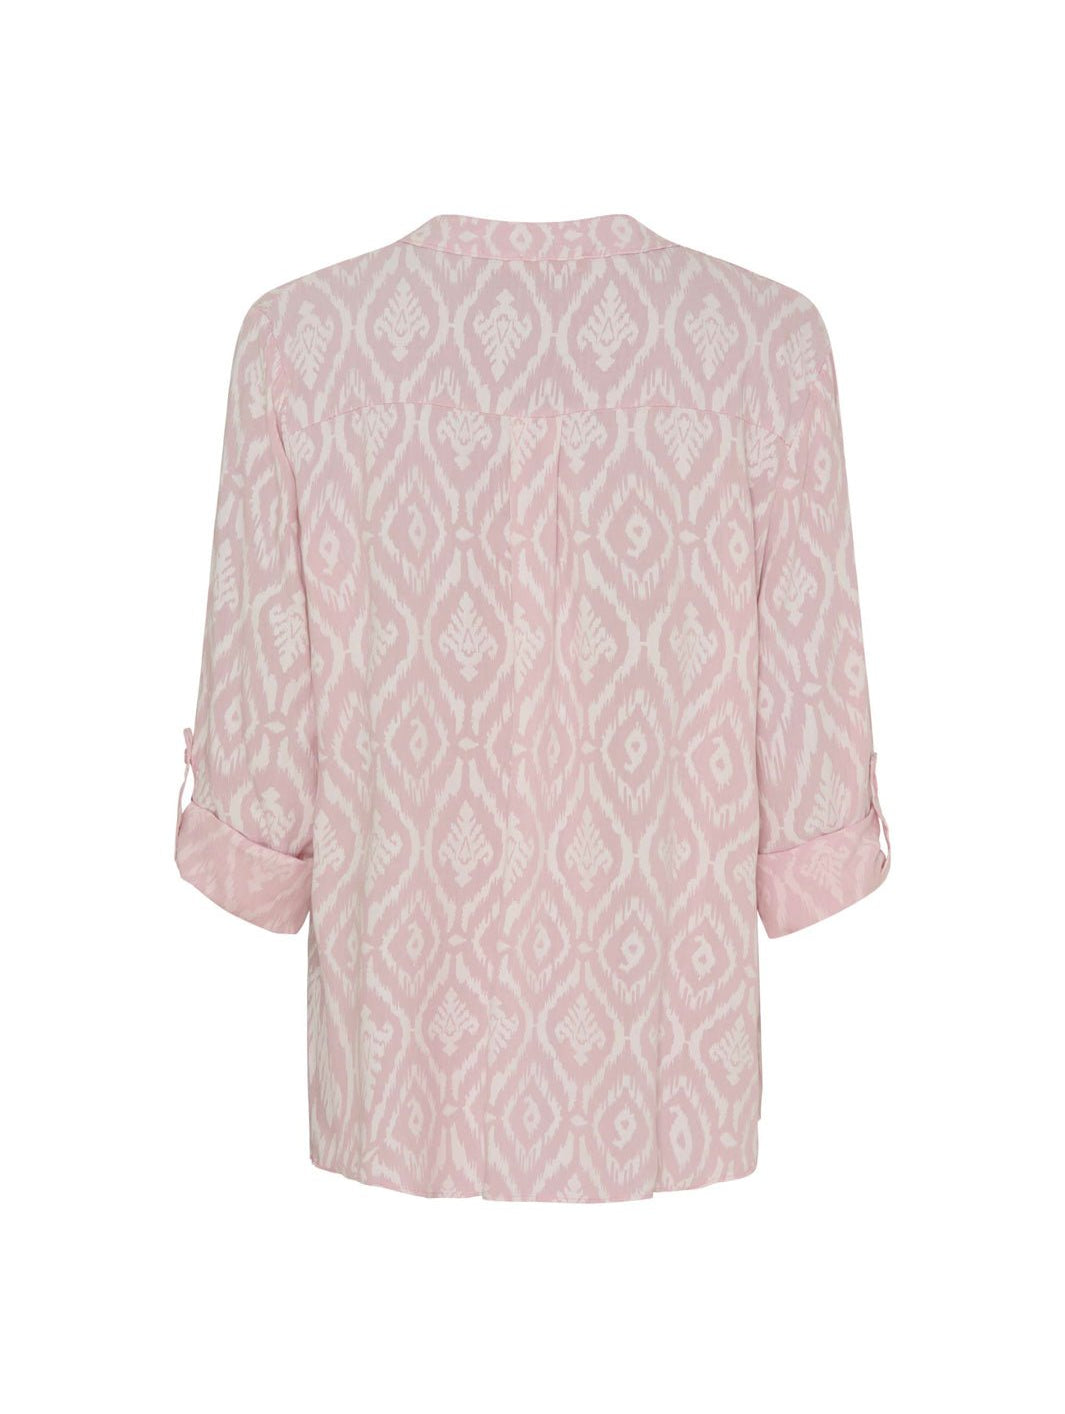 Marta du Chateau Elsa shirt rose - Online-Mode